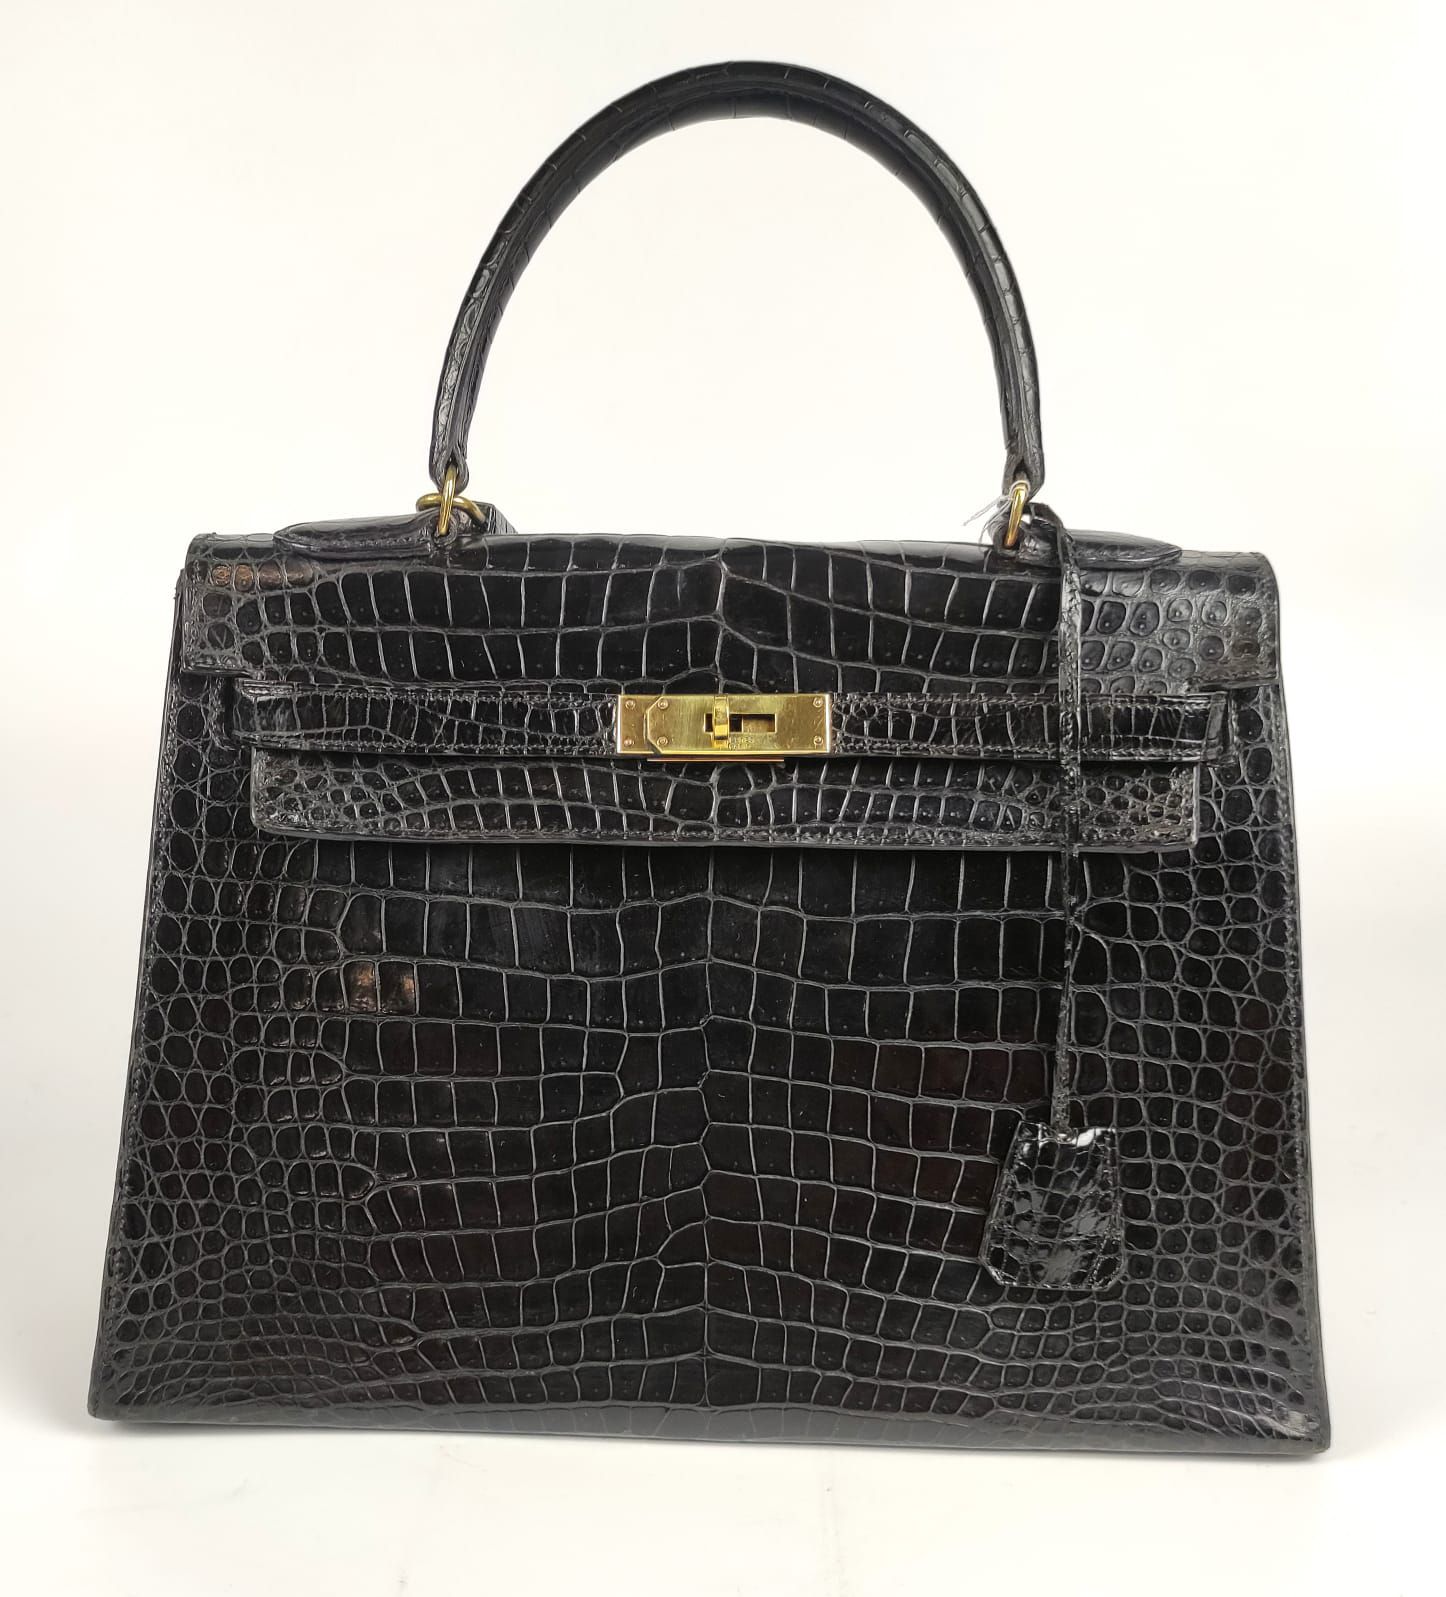 Null HERMES PARIS 'KELLY' handbag 32 cm in Singapore black crocodile (Crocodylus&hellip;